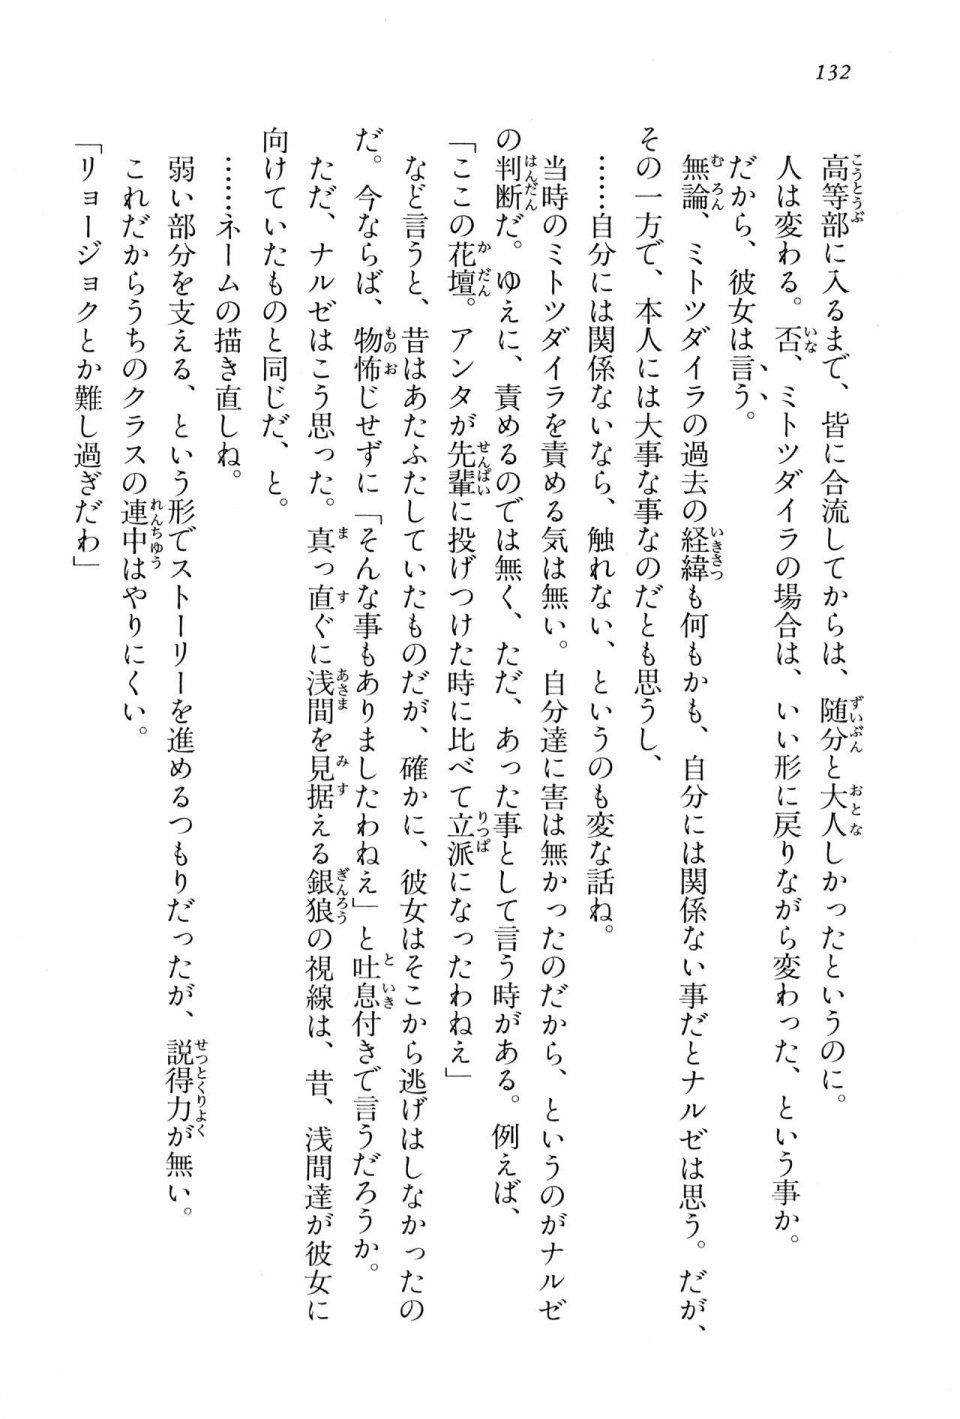 Kyoukai Senjou no Horizon BD Special Mininovel Vol 4(2B) - Photo #136